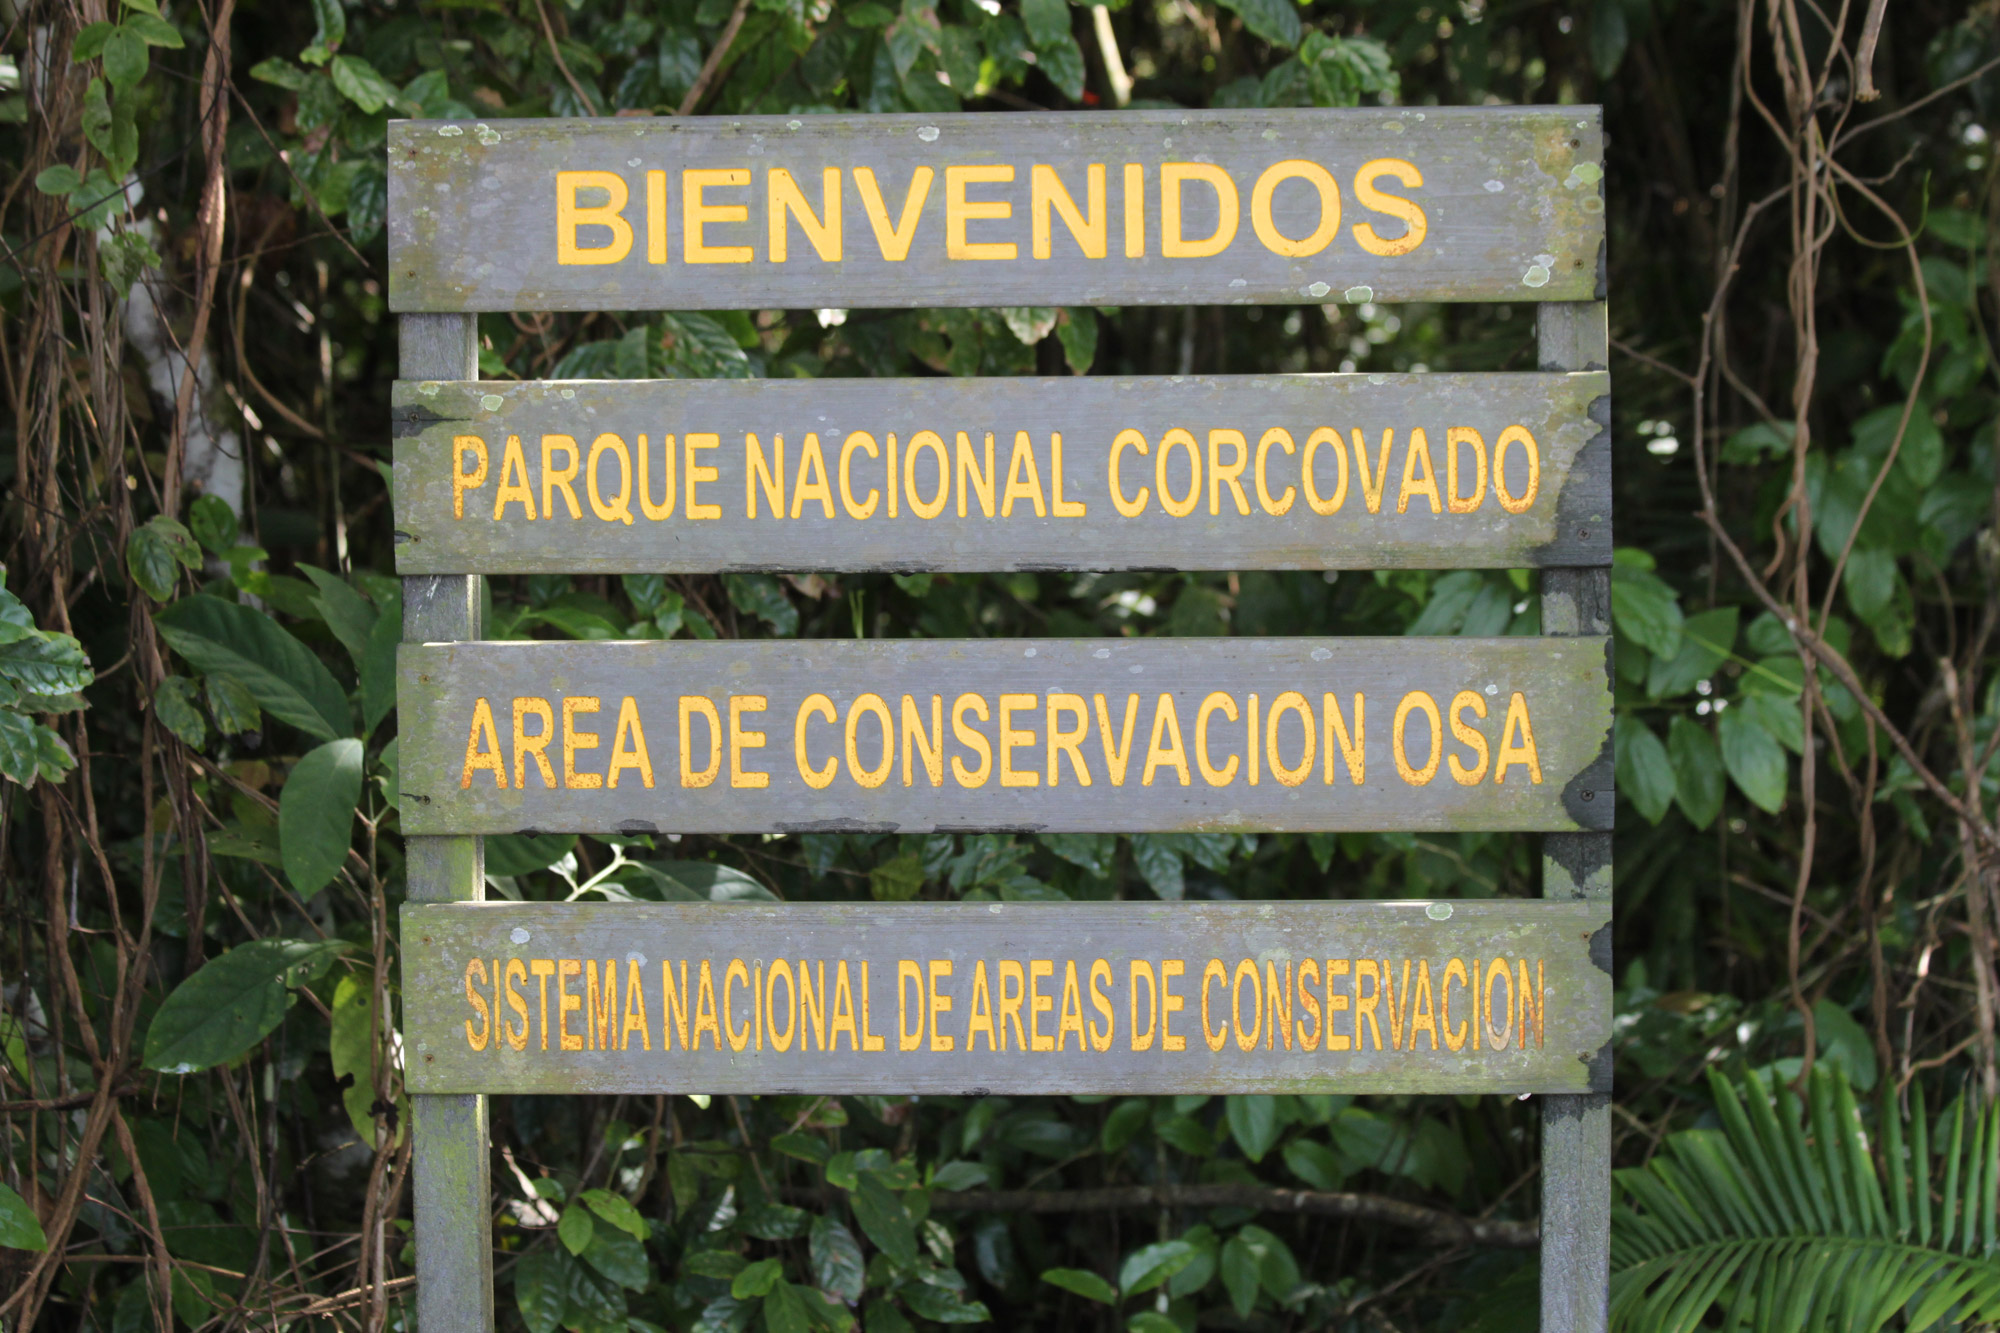 Parque Nacional Corcovado - meest teleurstellende bestemming?